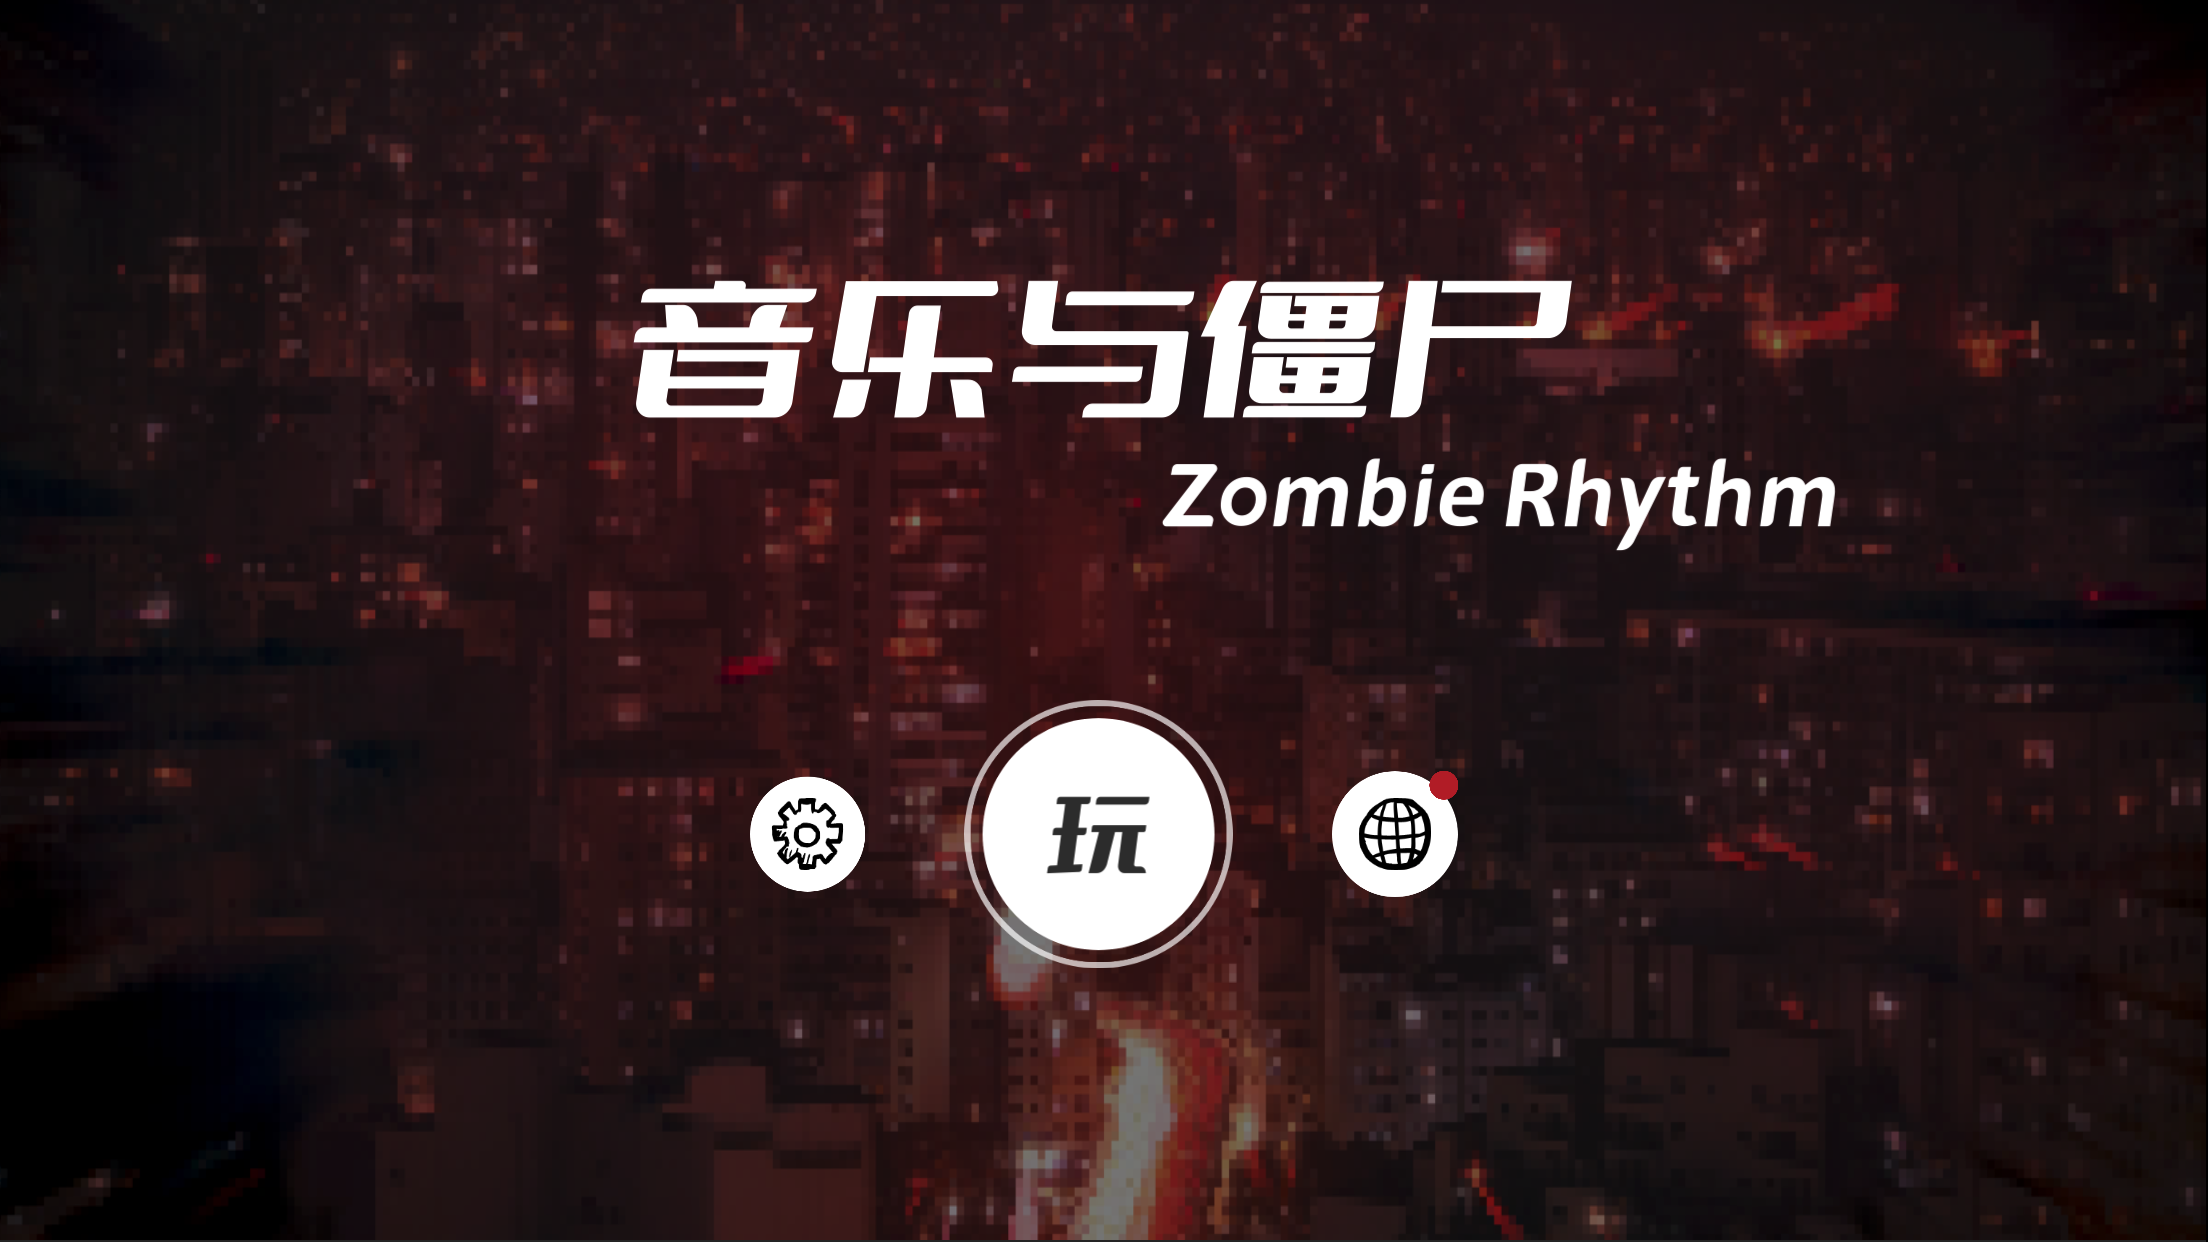 Screenshot 1 of Musika at Zombies: Zombie Rhythm 1.0.2